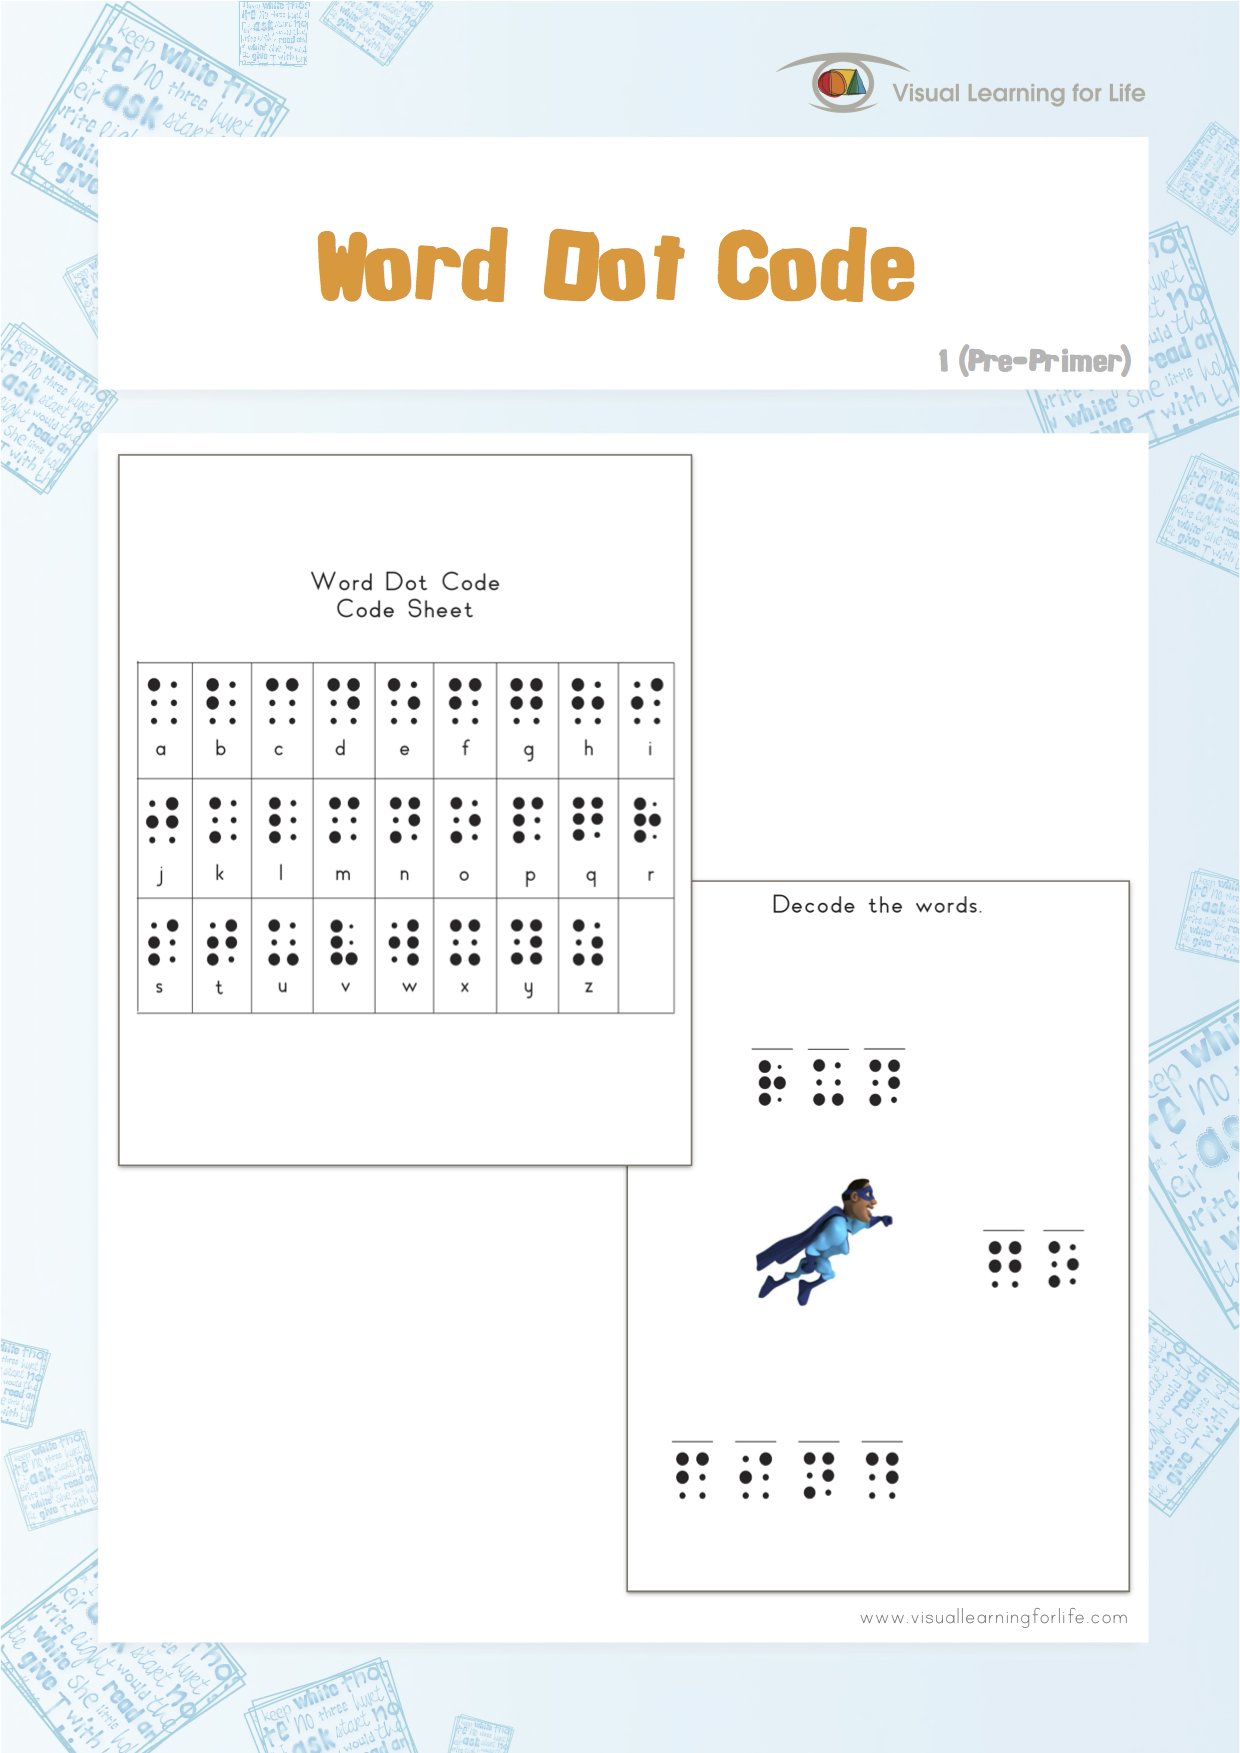 Word Dot Code 1